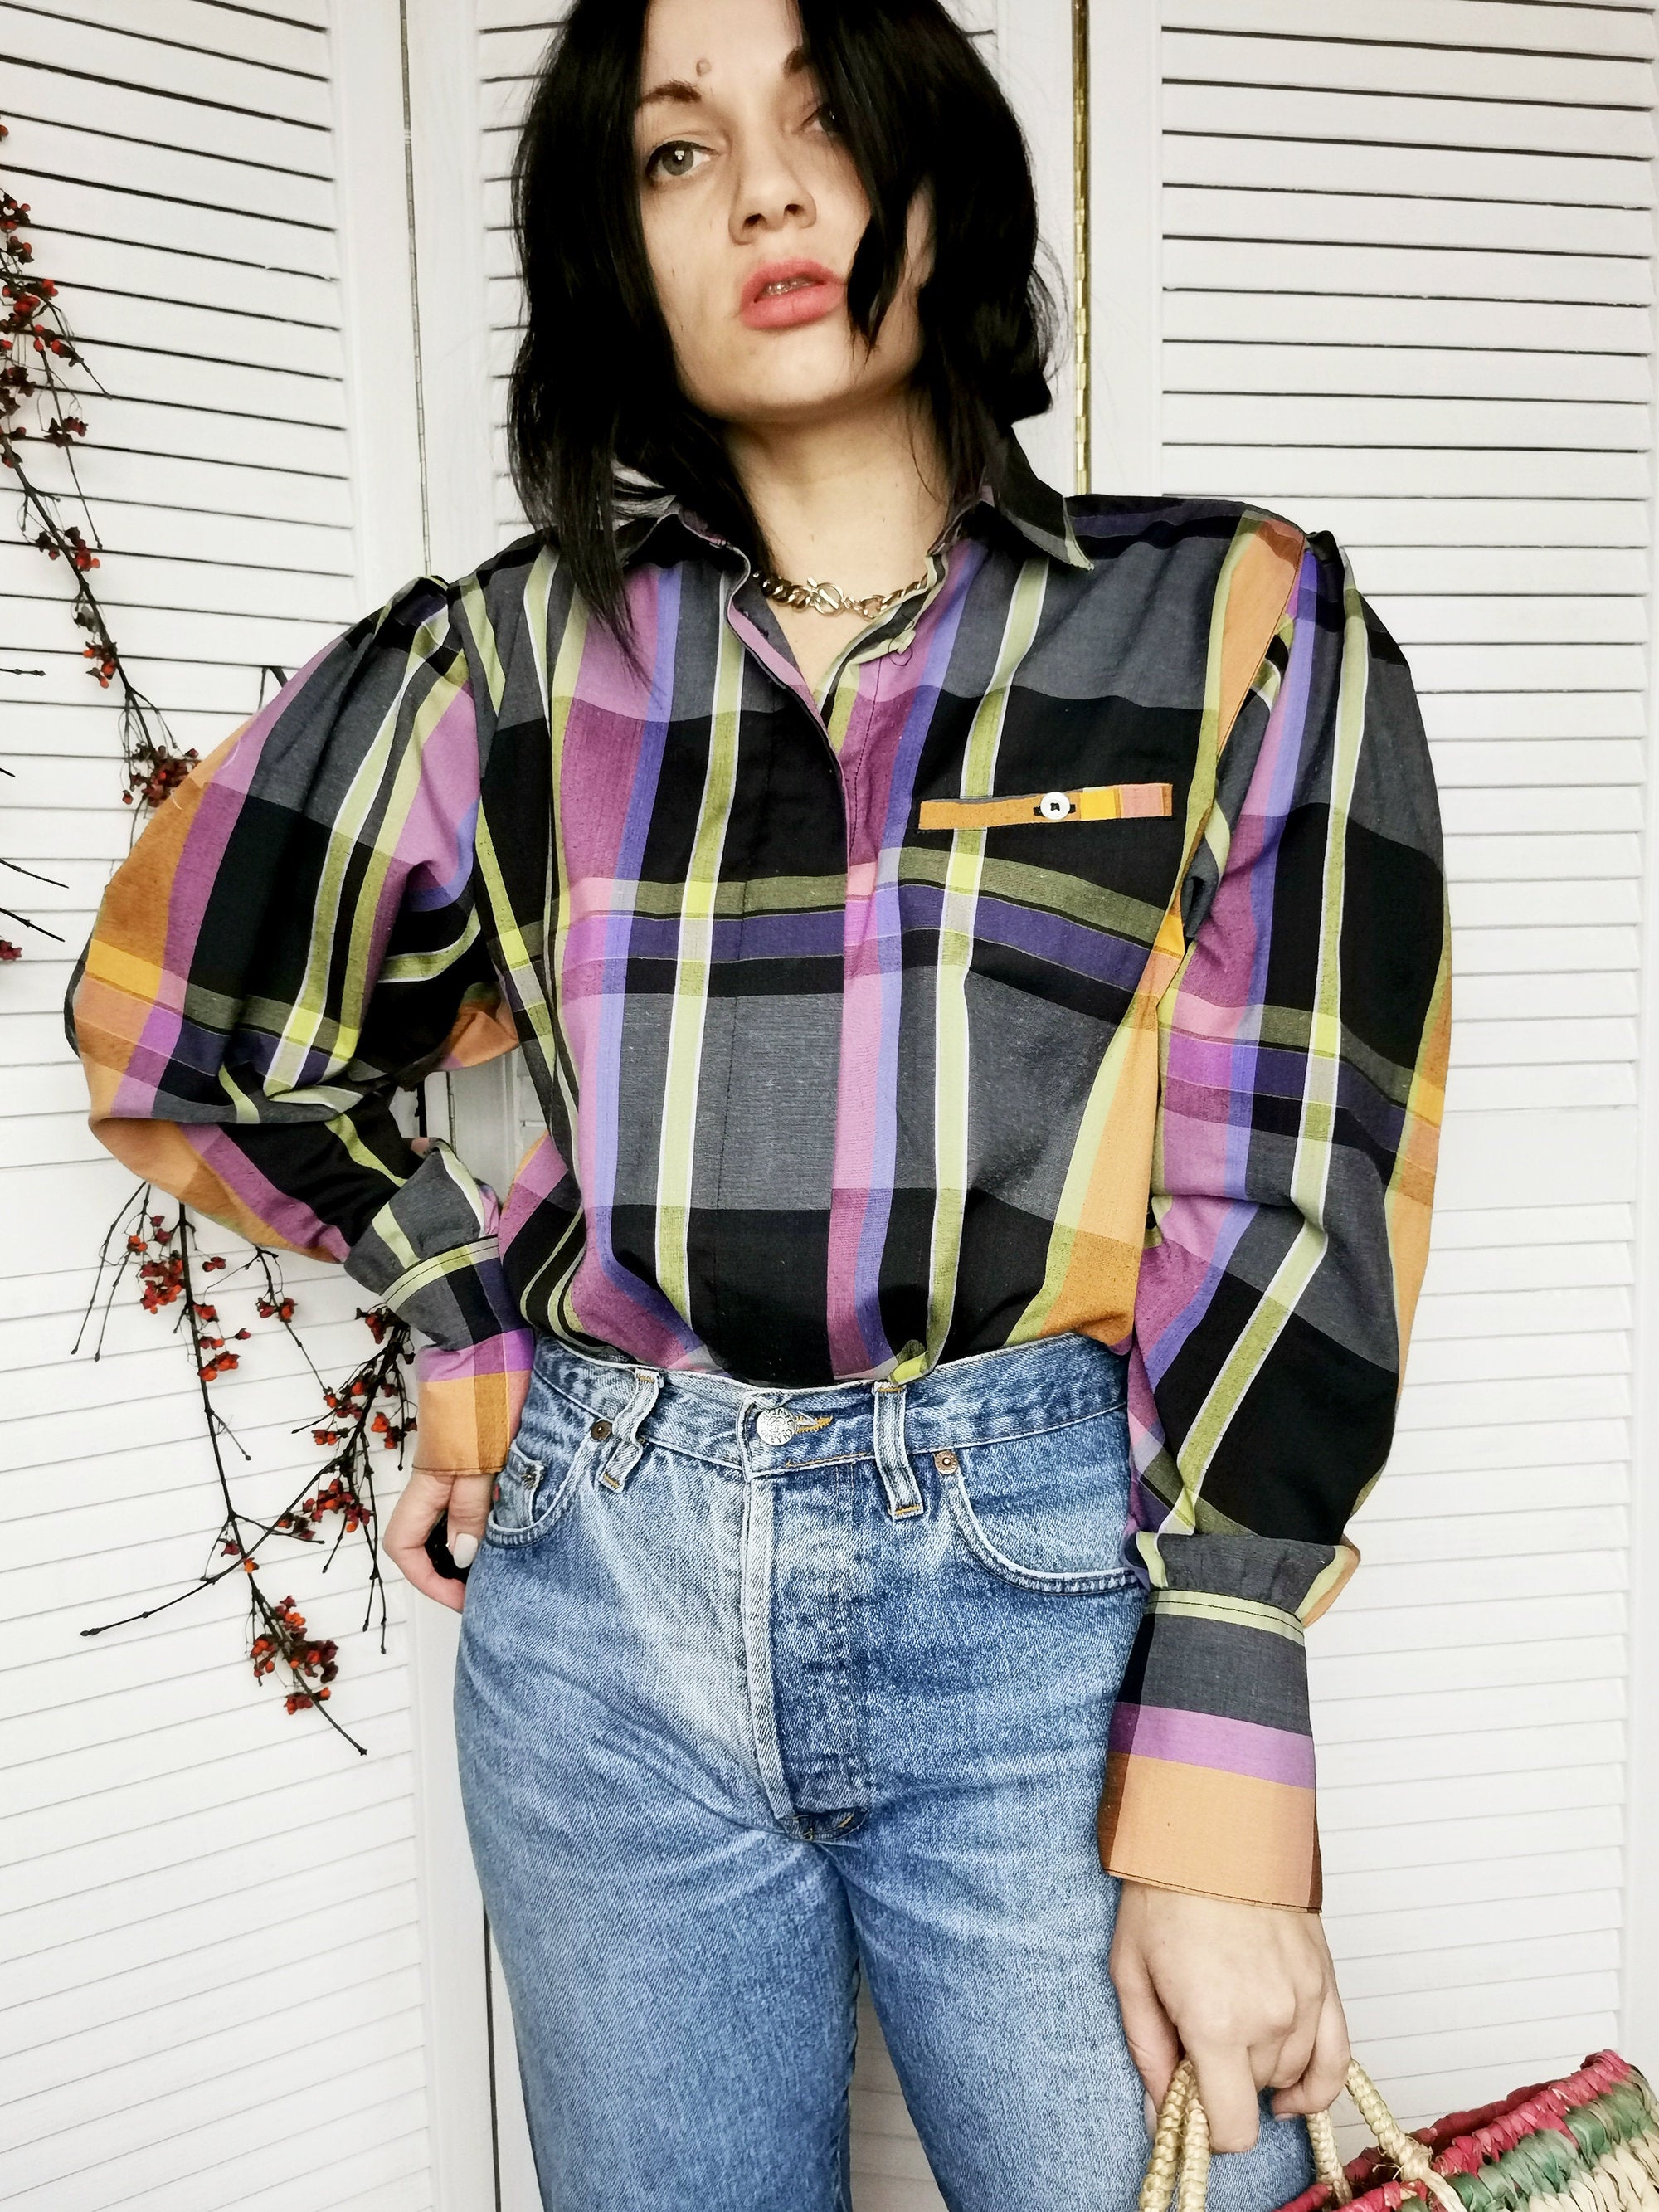 Vintage 80s tartan plaid print colorful shirt blouse